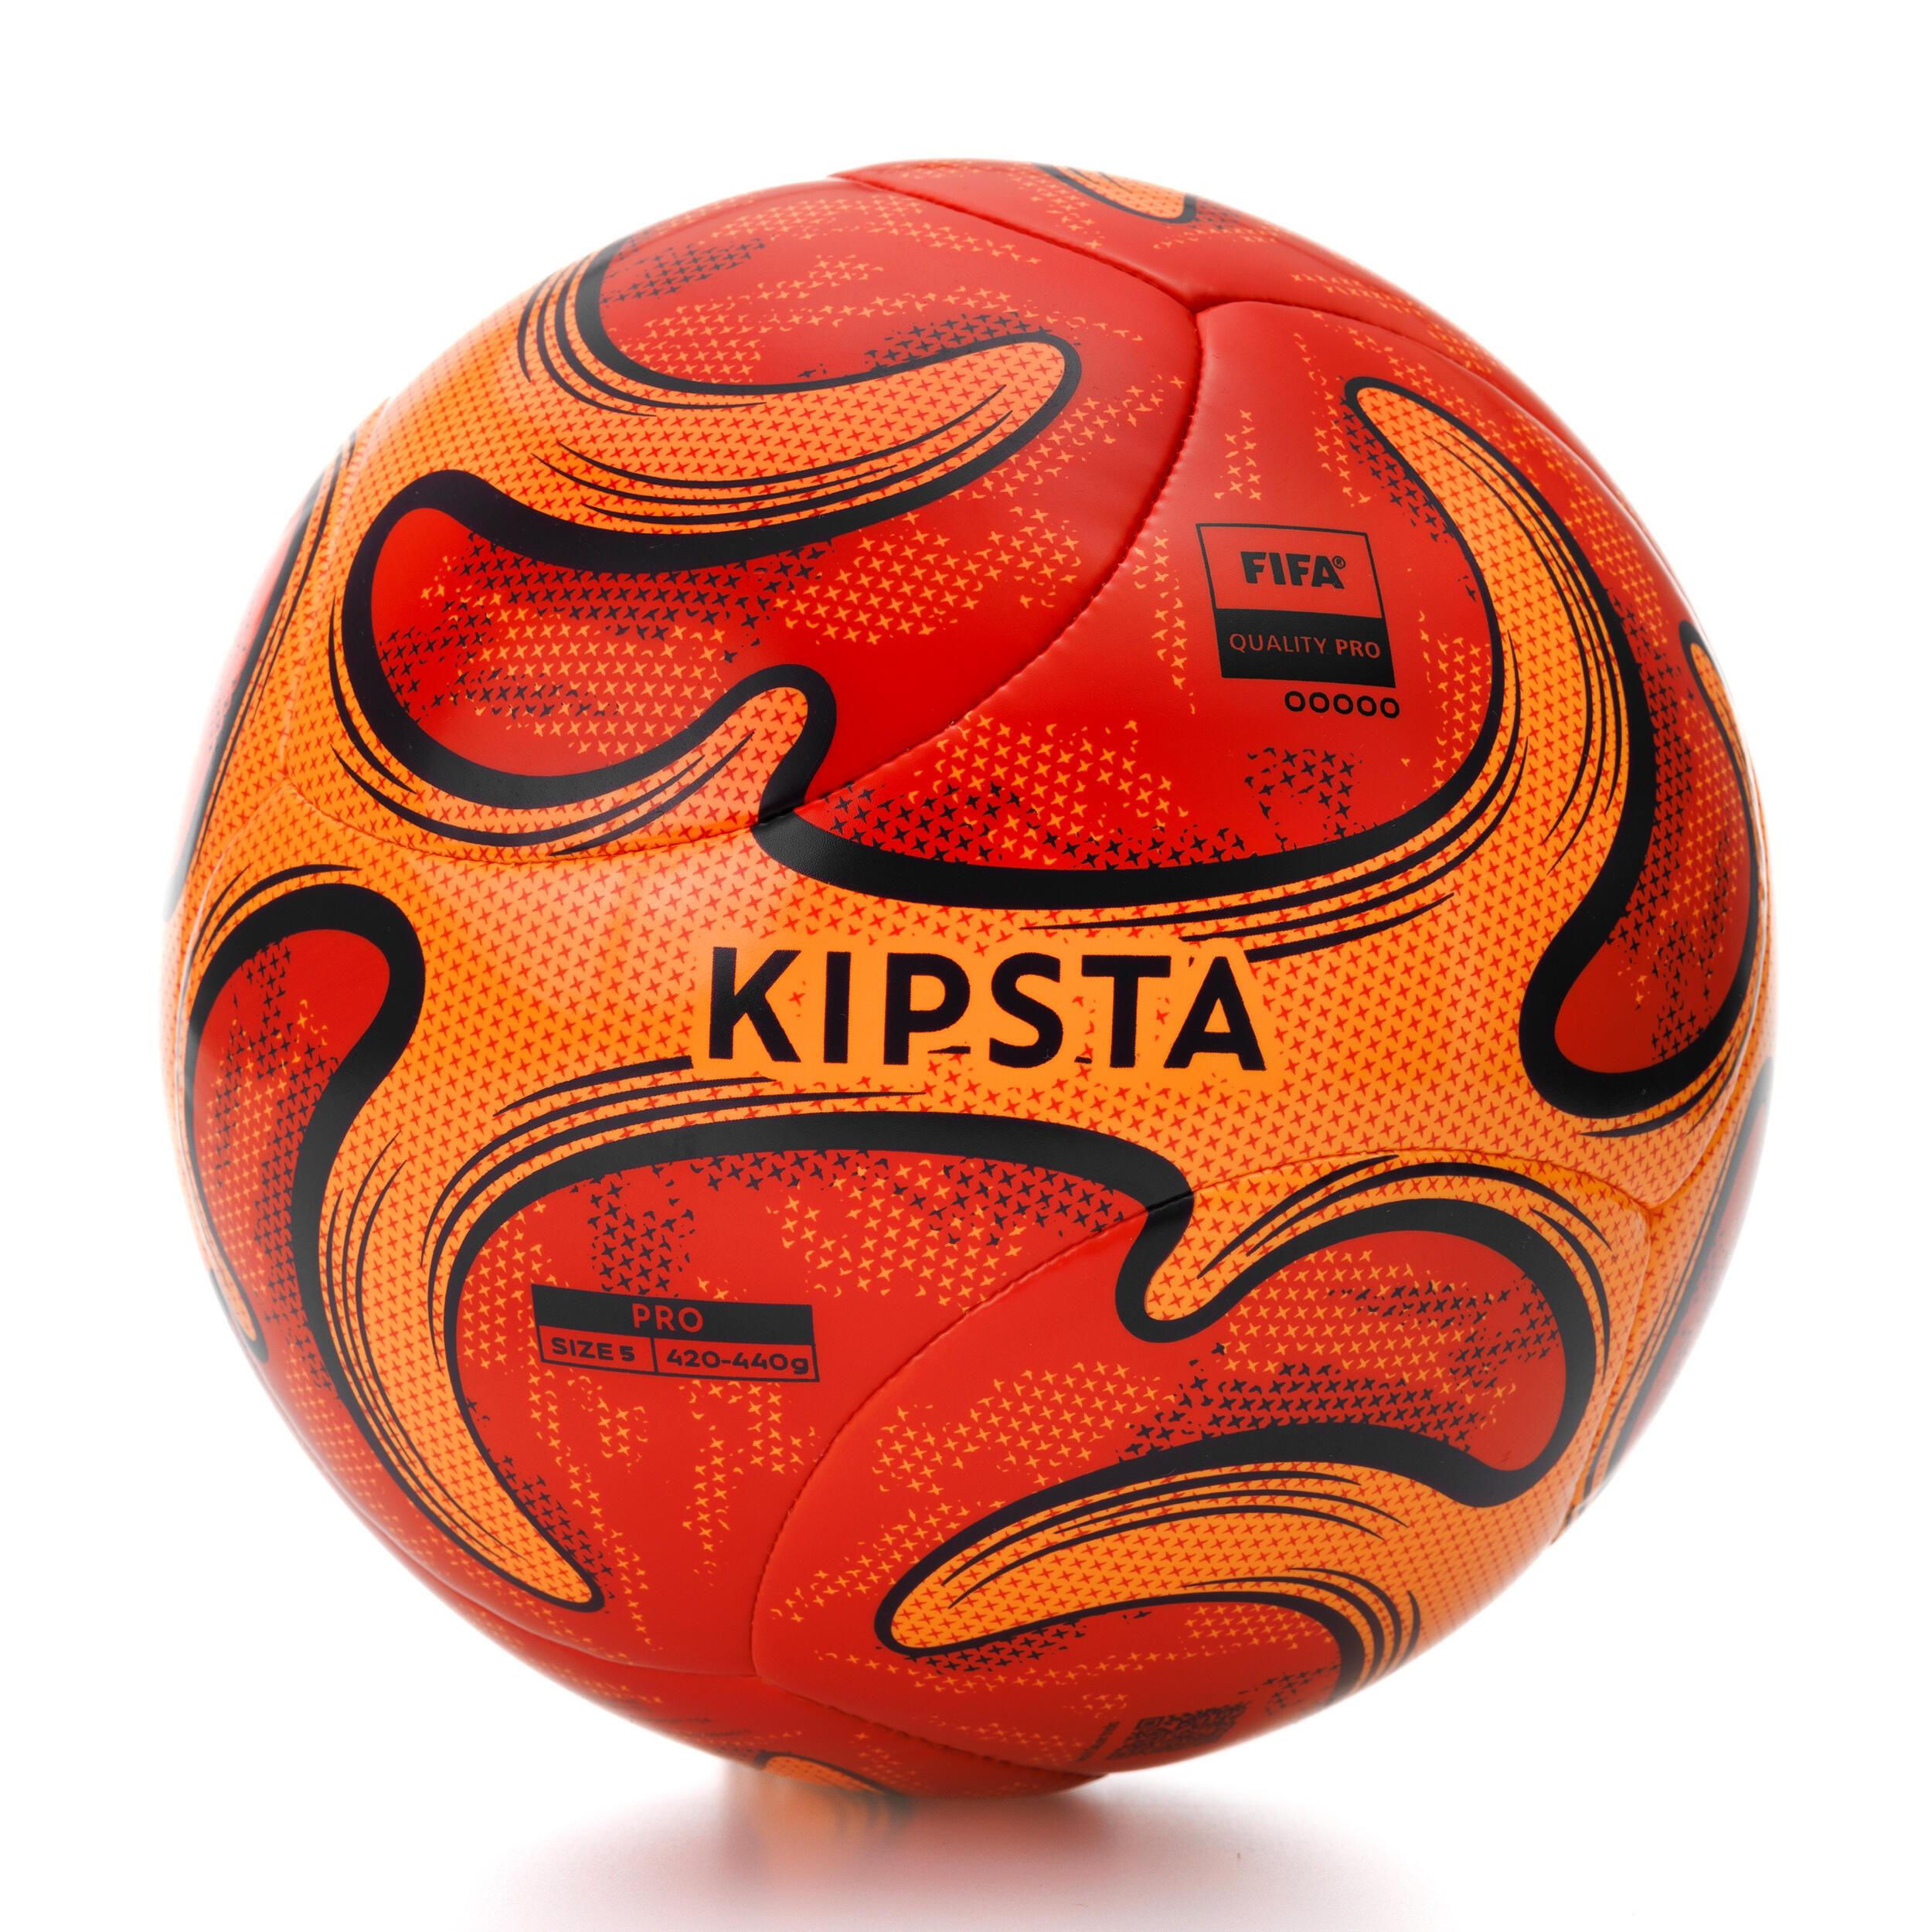 KIPSTA Hybrid Pro Size 5 Beach Soccer Ball - Red/Orange